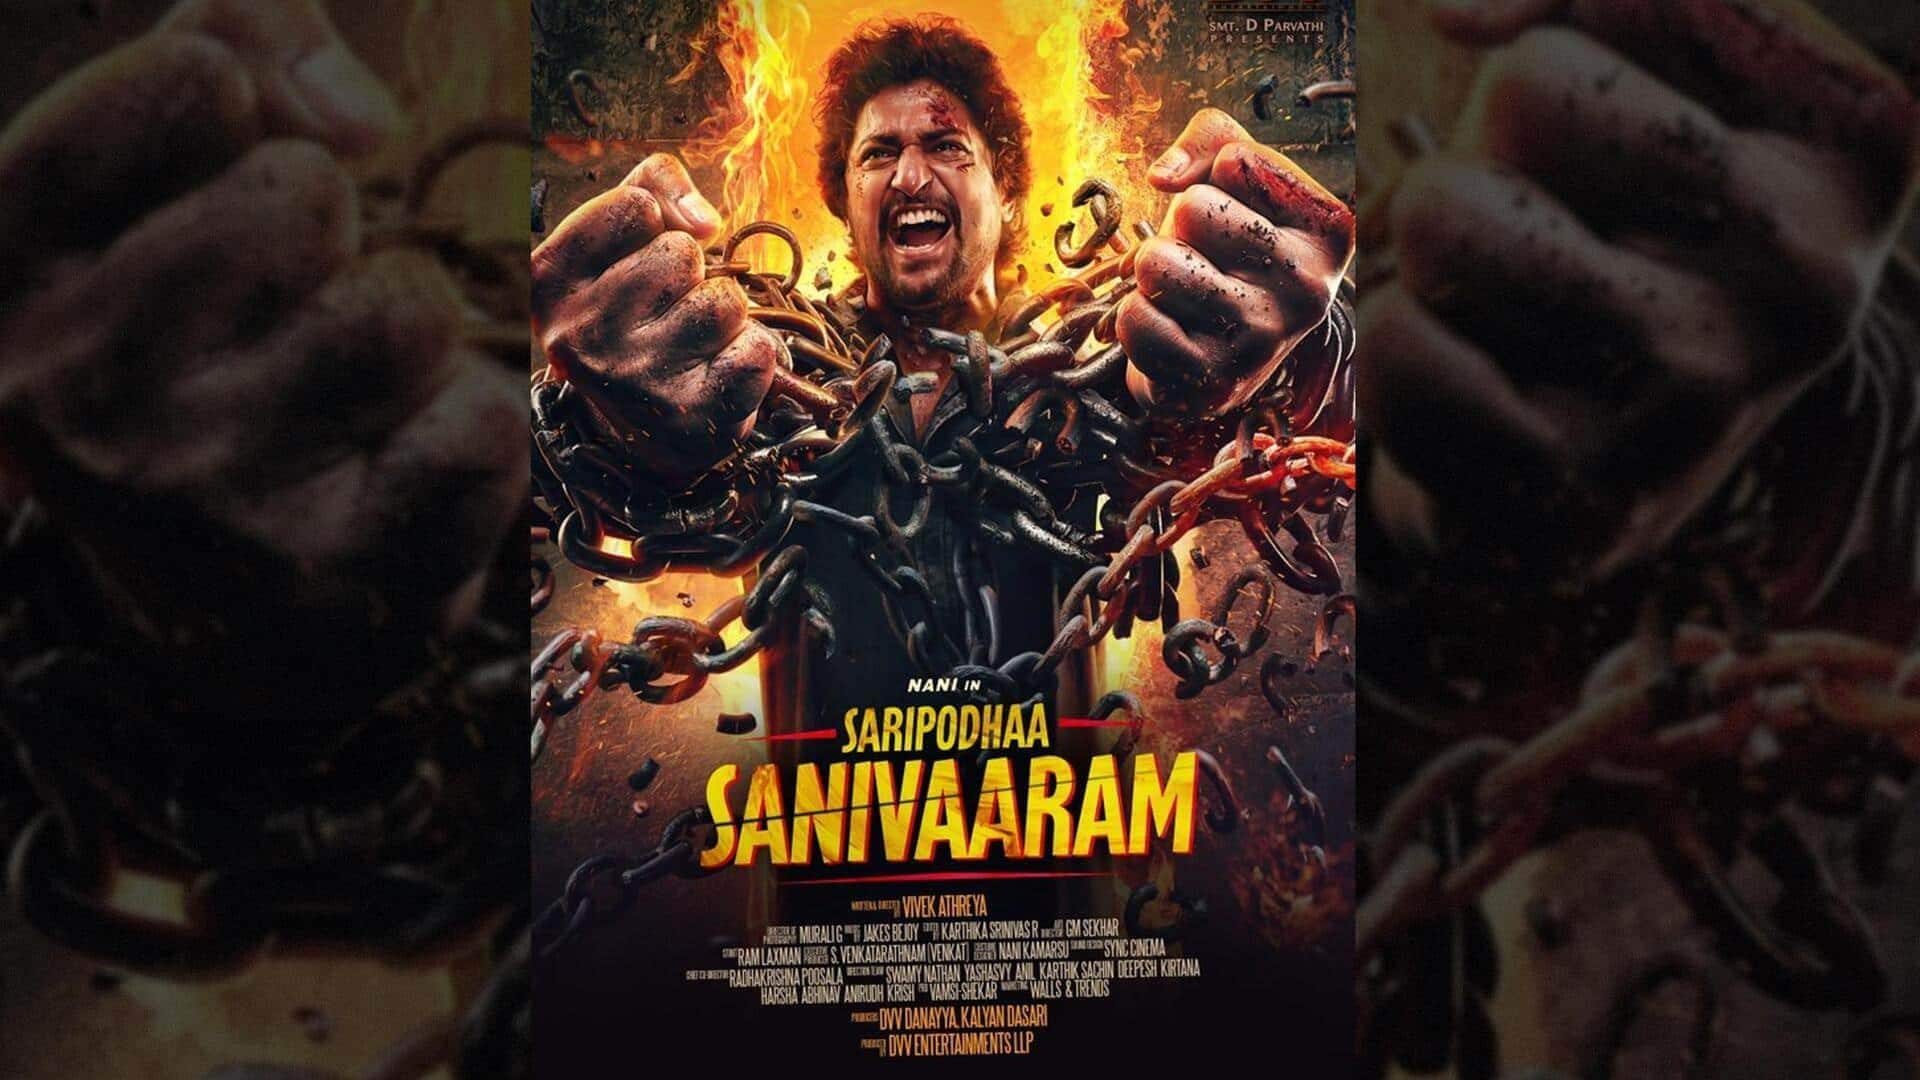 'Saripodhaa Sanivaaram' glimpse released on Nani's birthday